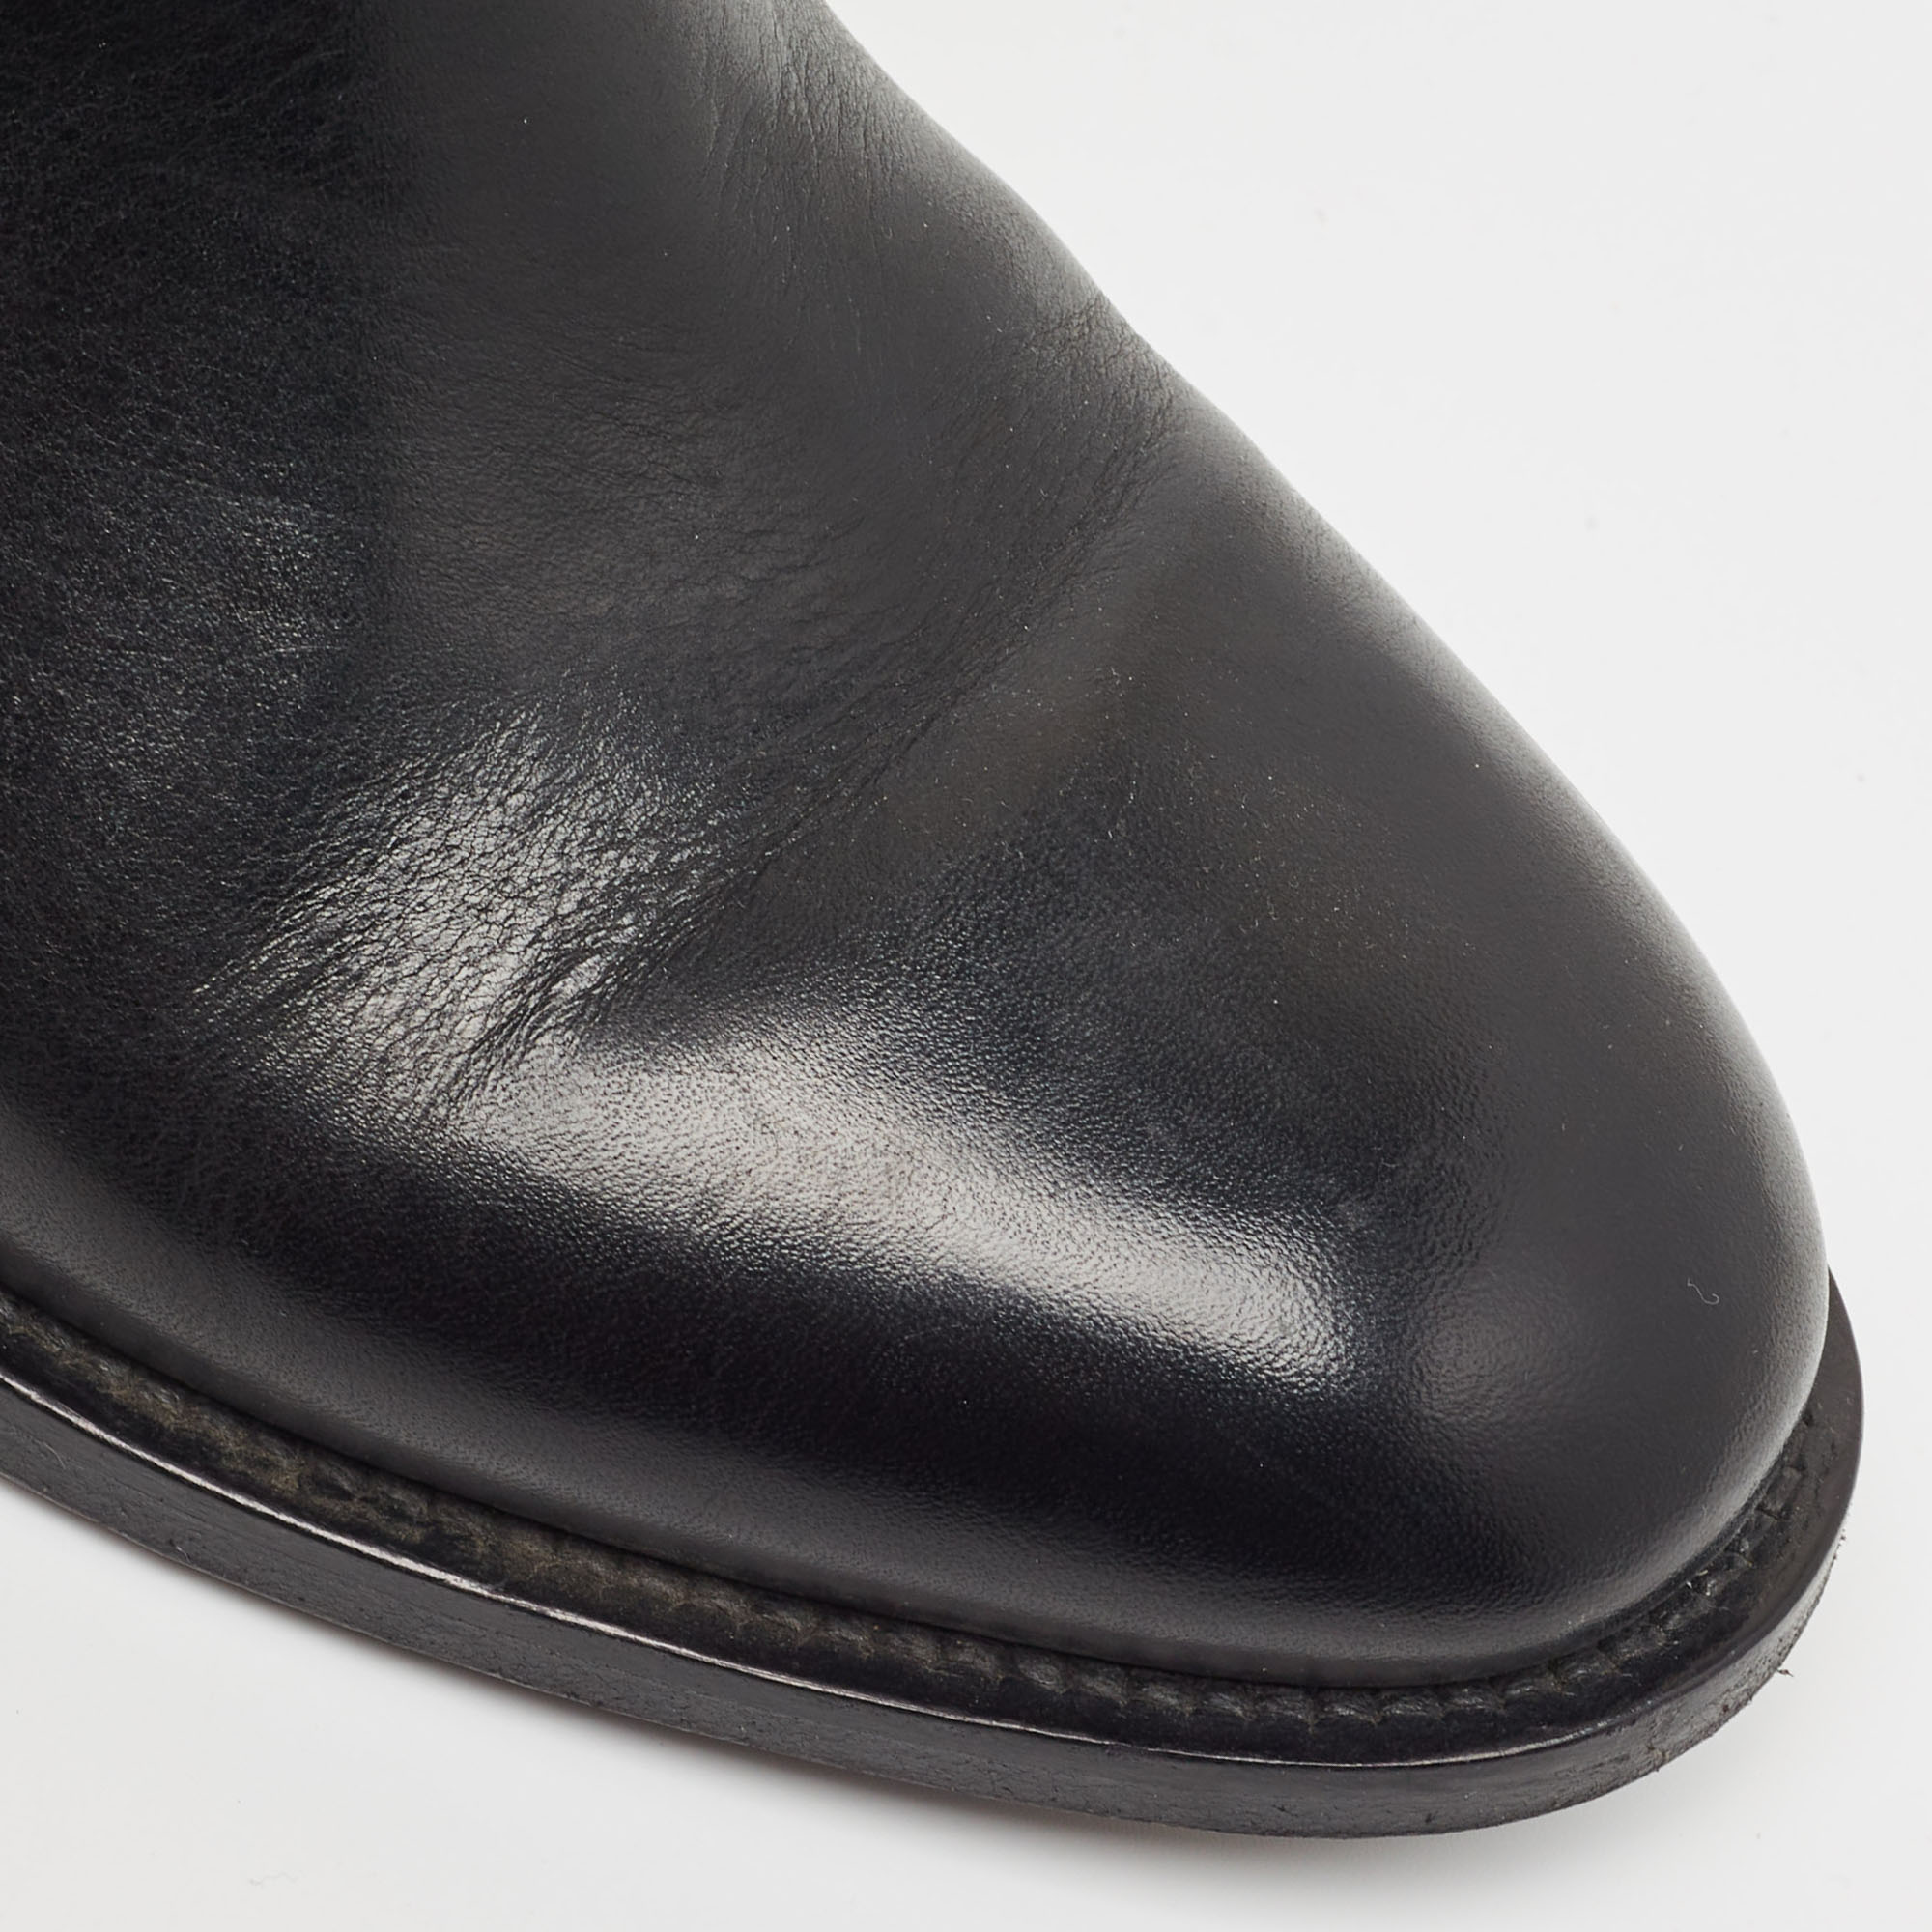 Balenciaga Black Leather Knee Length Boots Size 37